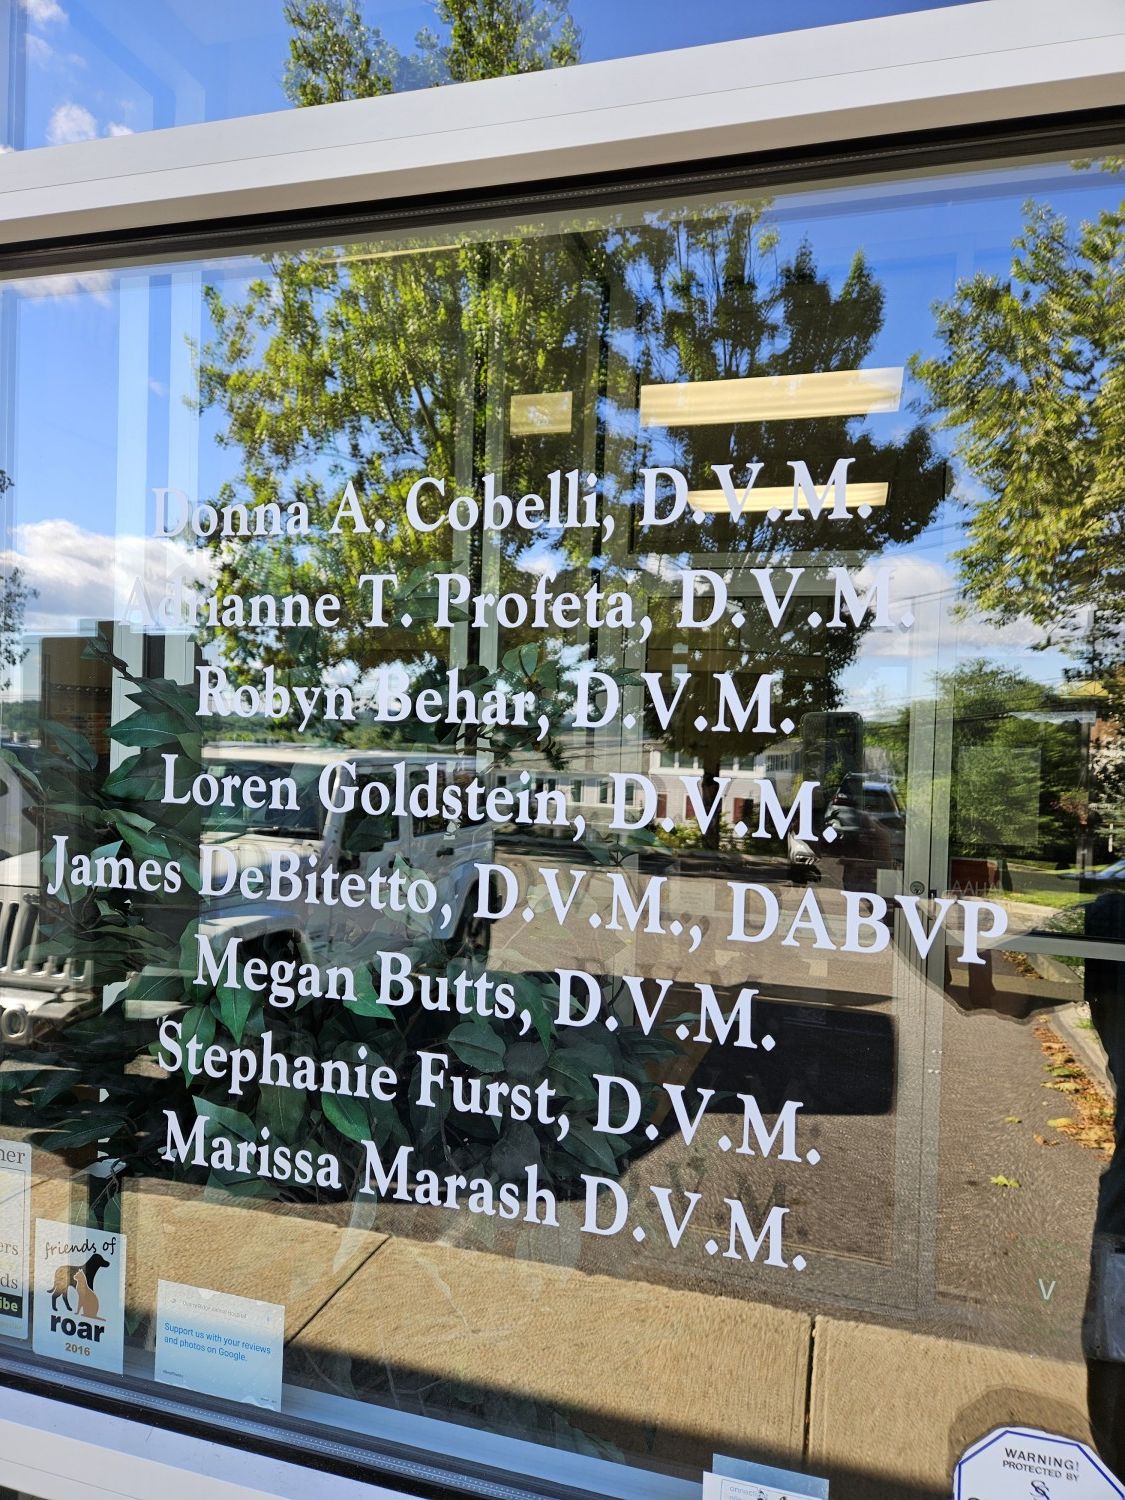 Doctors Names Listed on Door